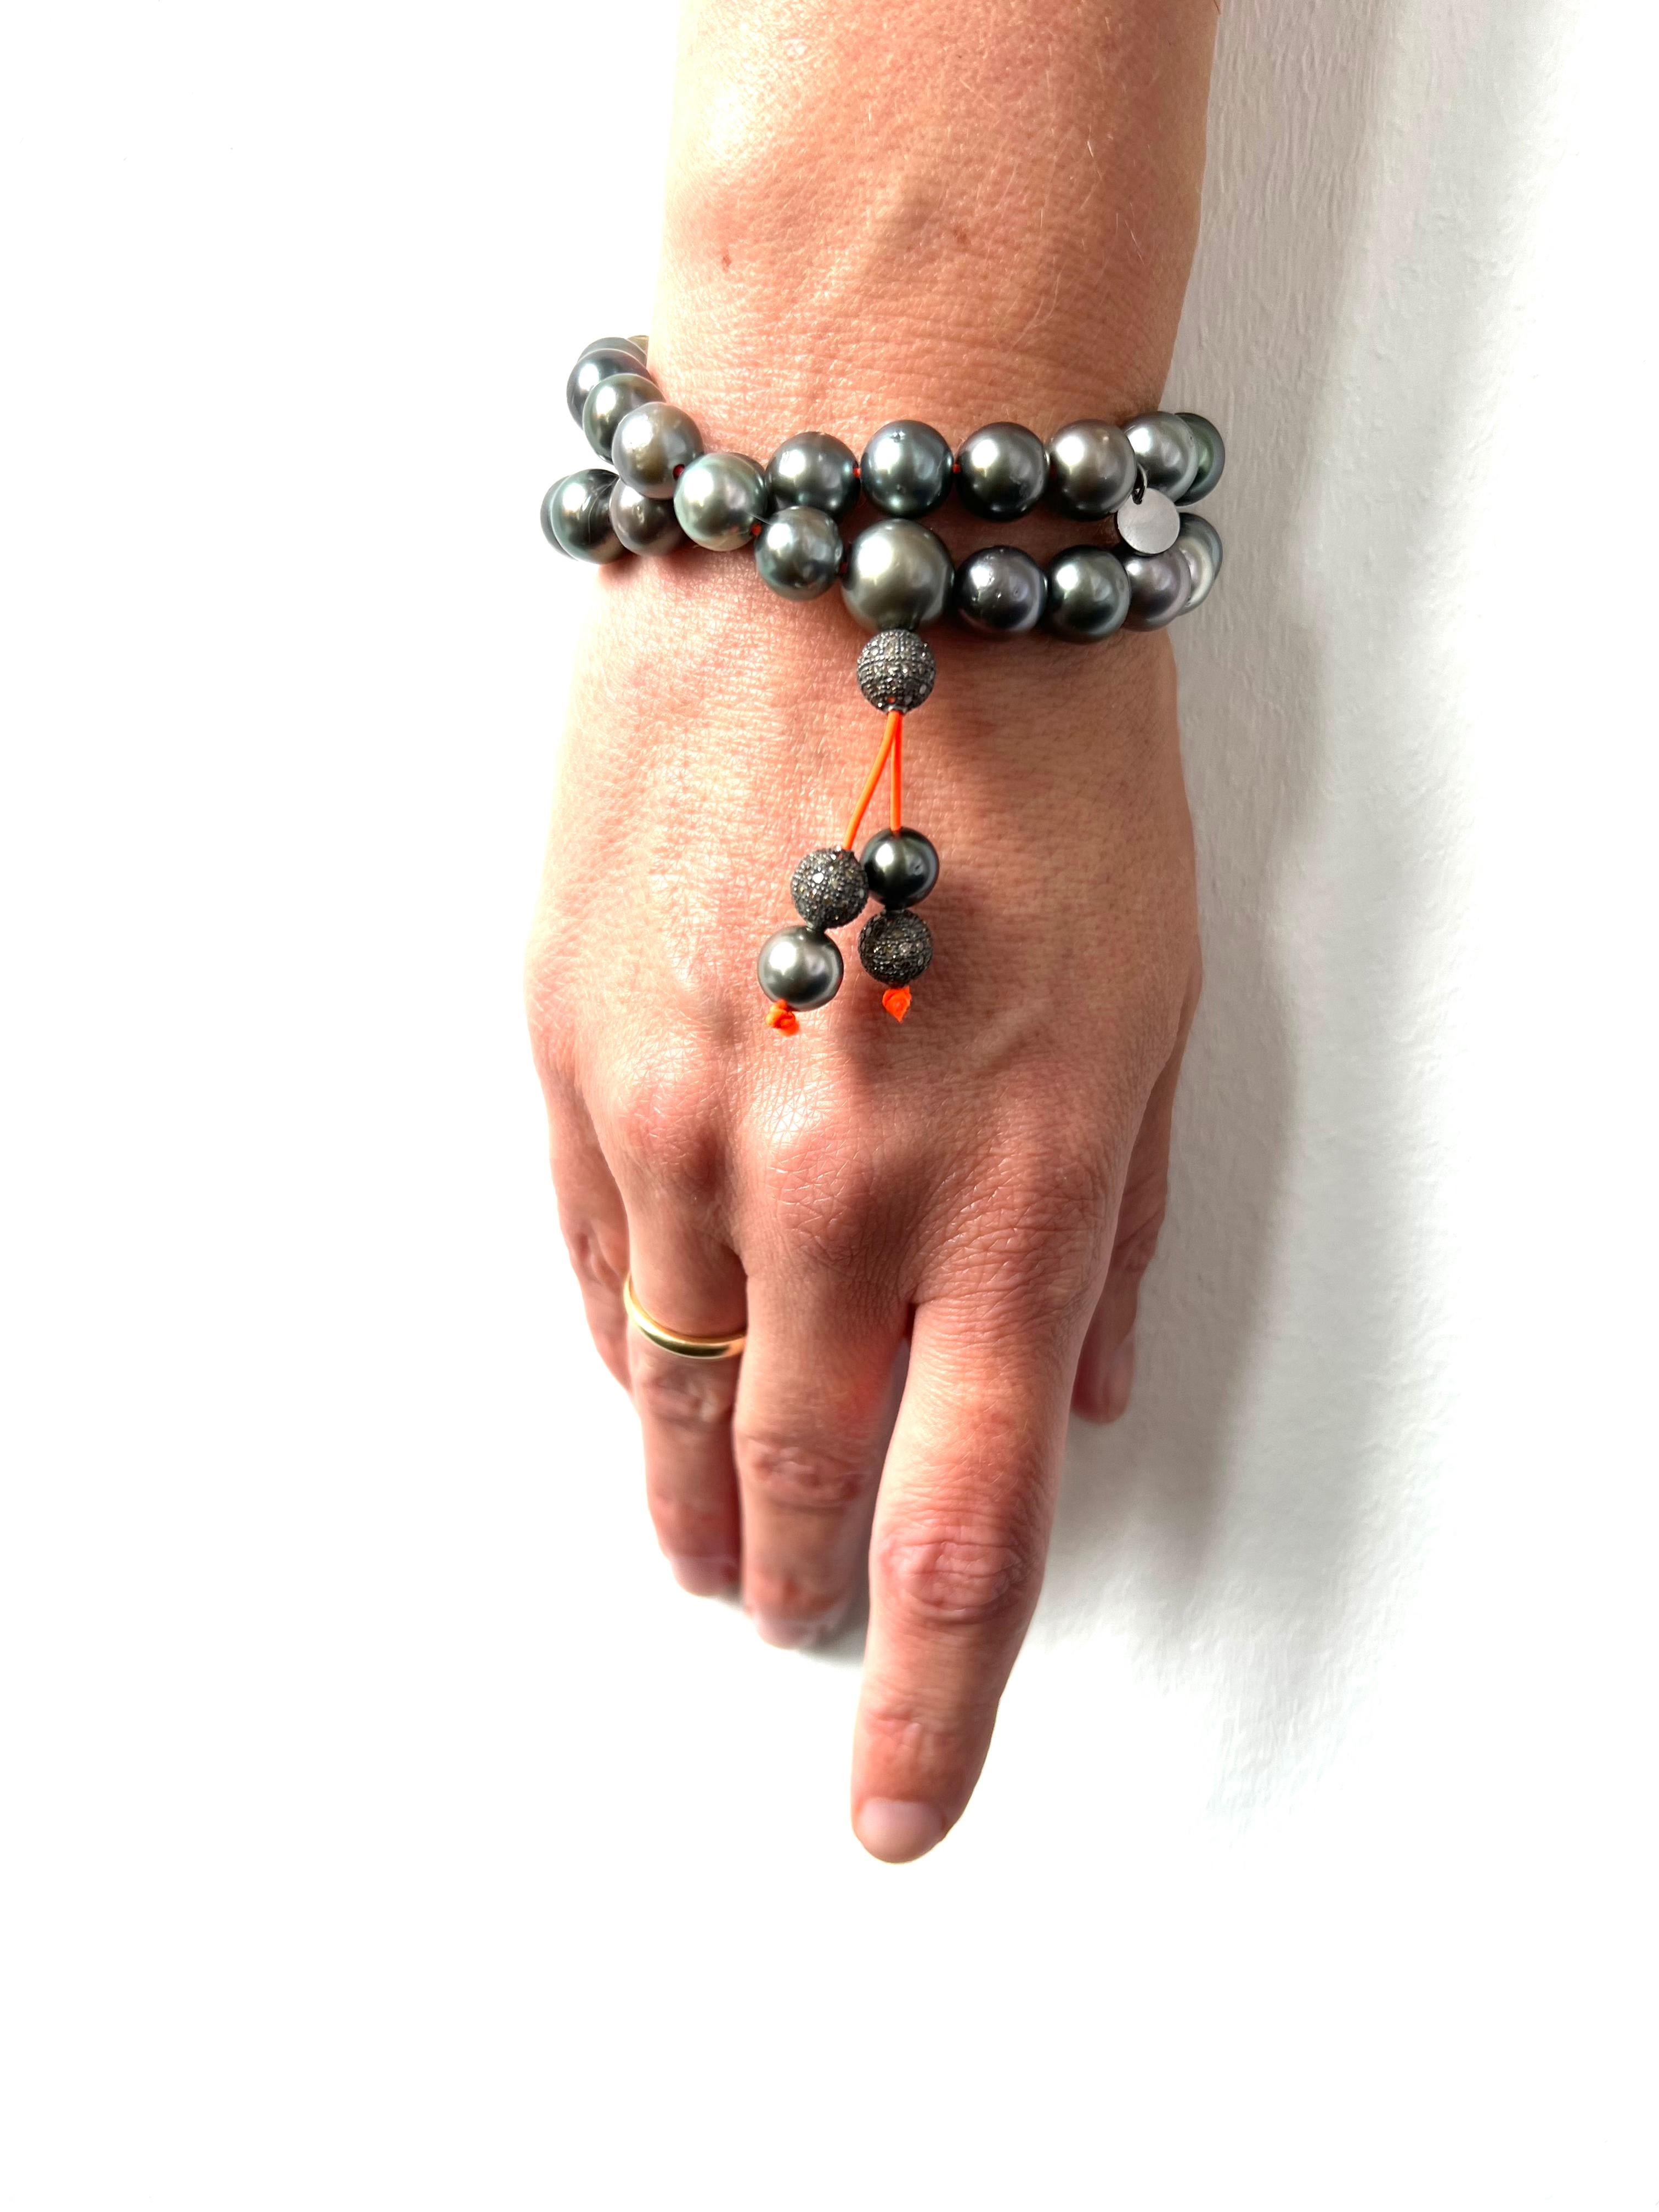 Bead Prayer bracelet/necklace with Tahiti pearls and silver encrusted diamond beads